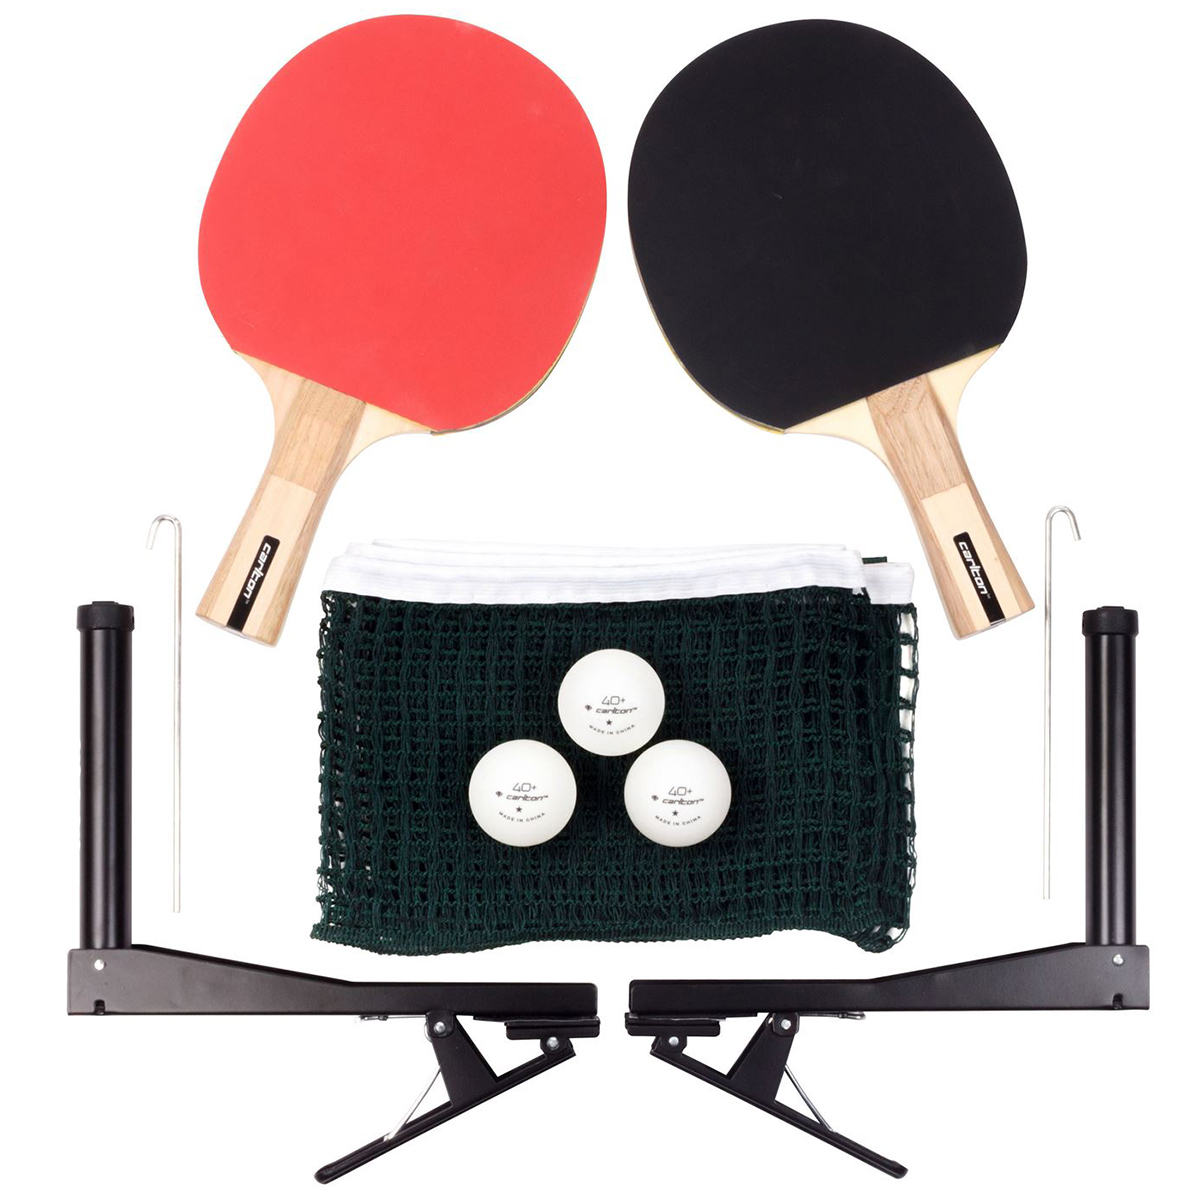 Carlton Champ 2-Player Table Tennis Set